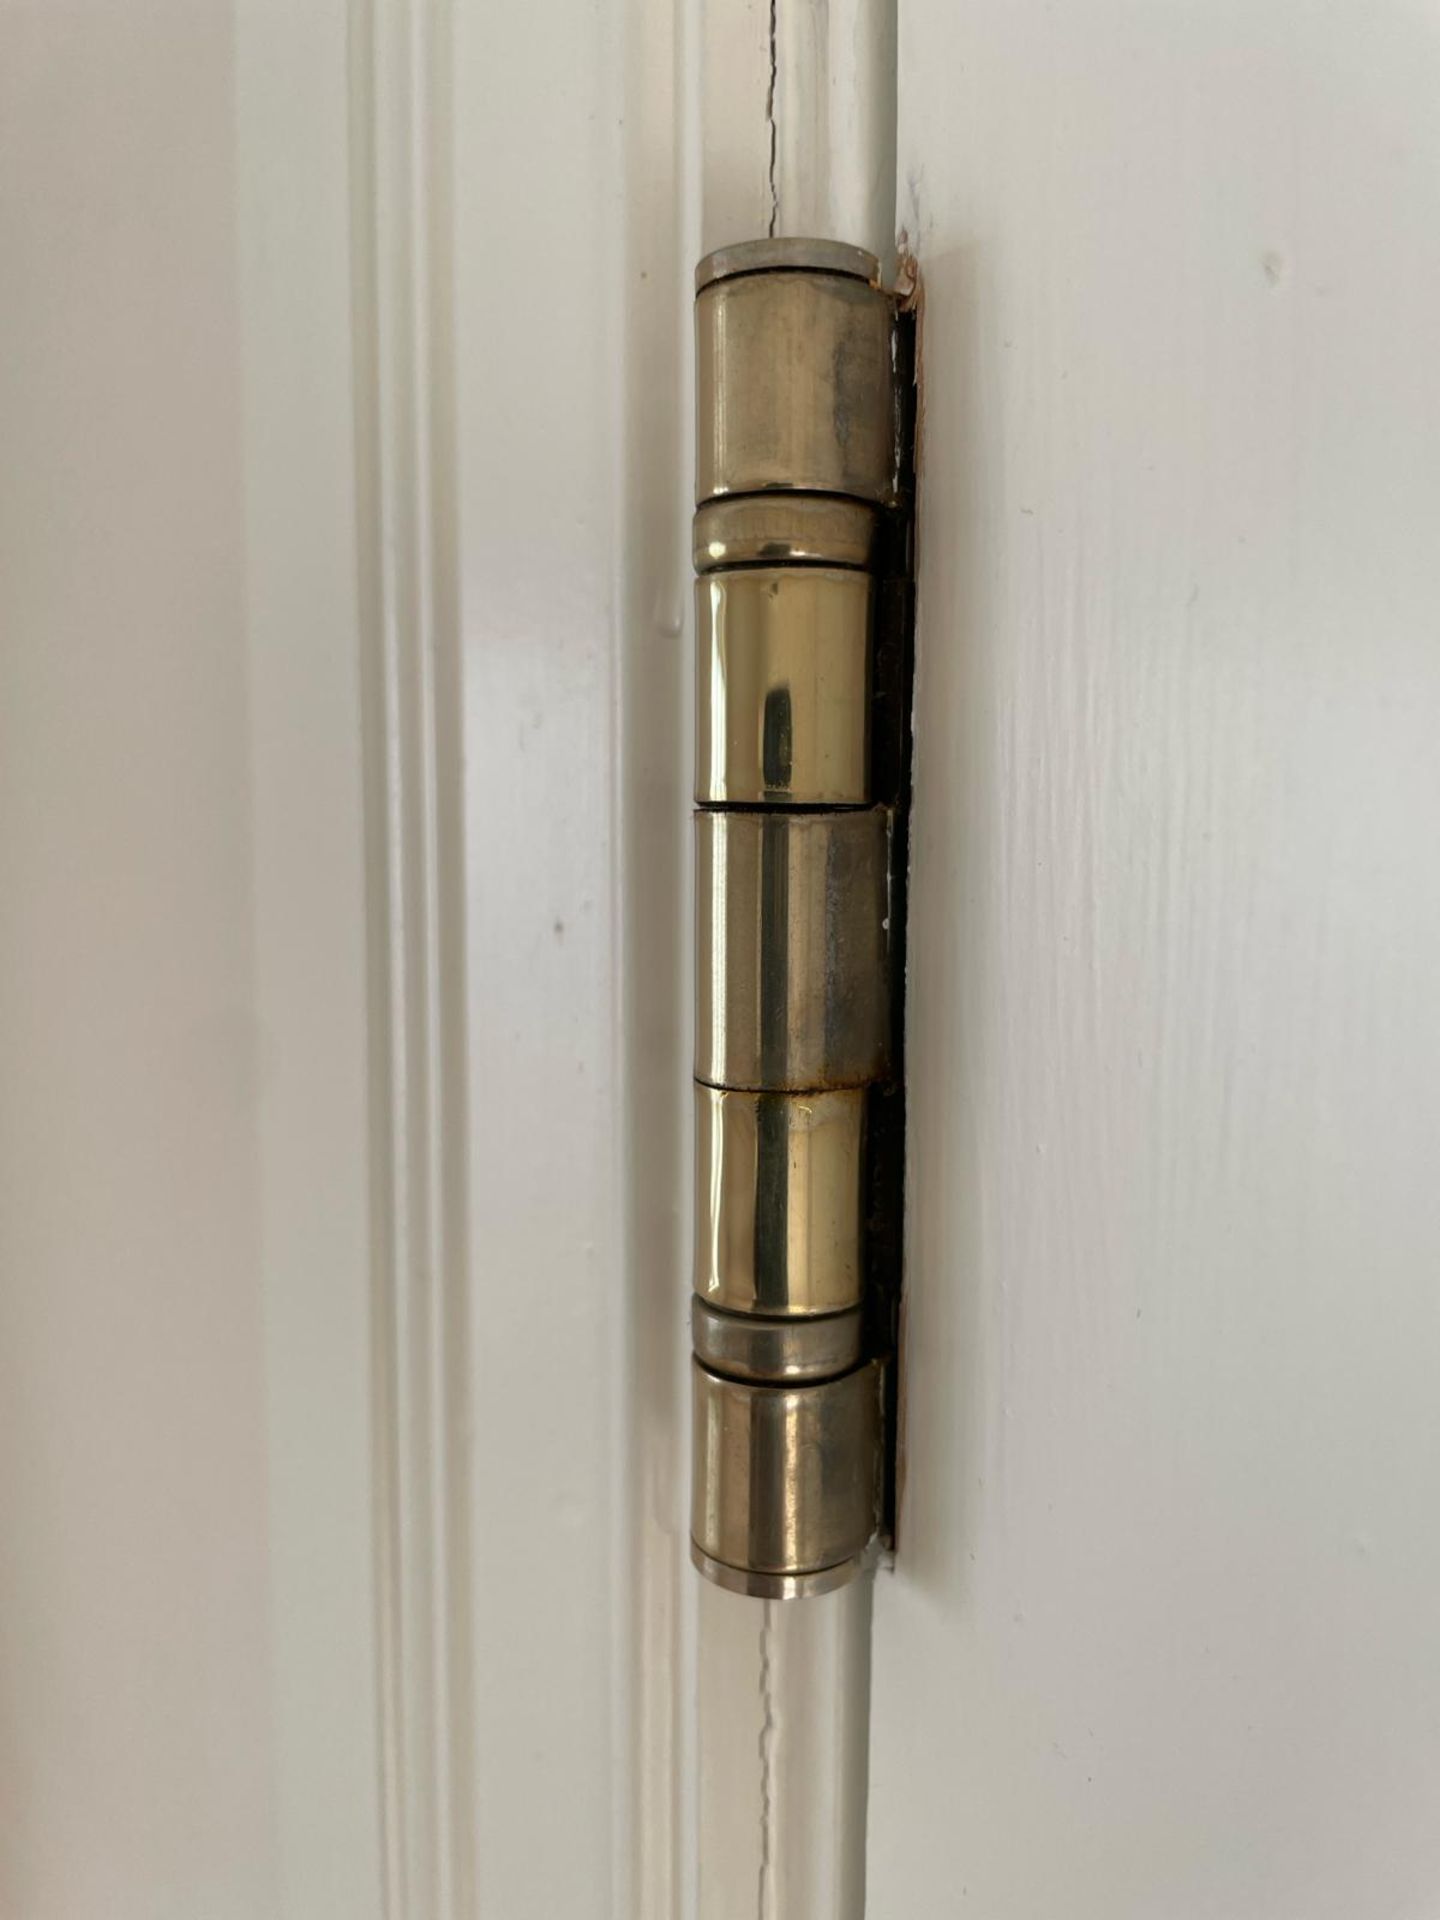 1 x Solid Wood Painted Internal Door, White - Image 5 of 11